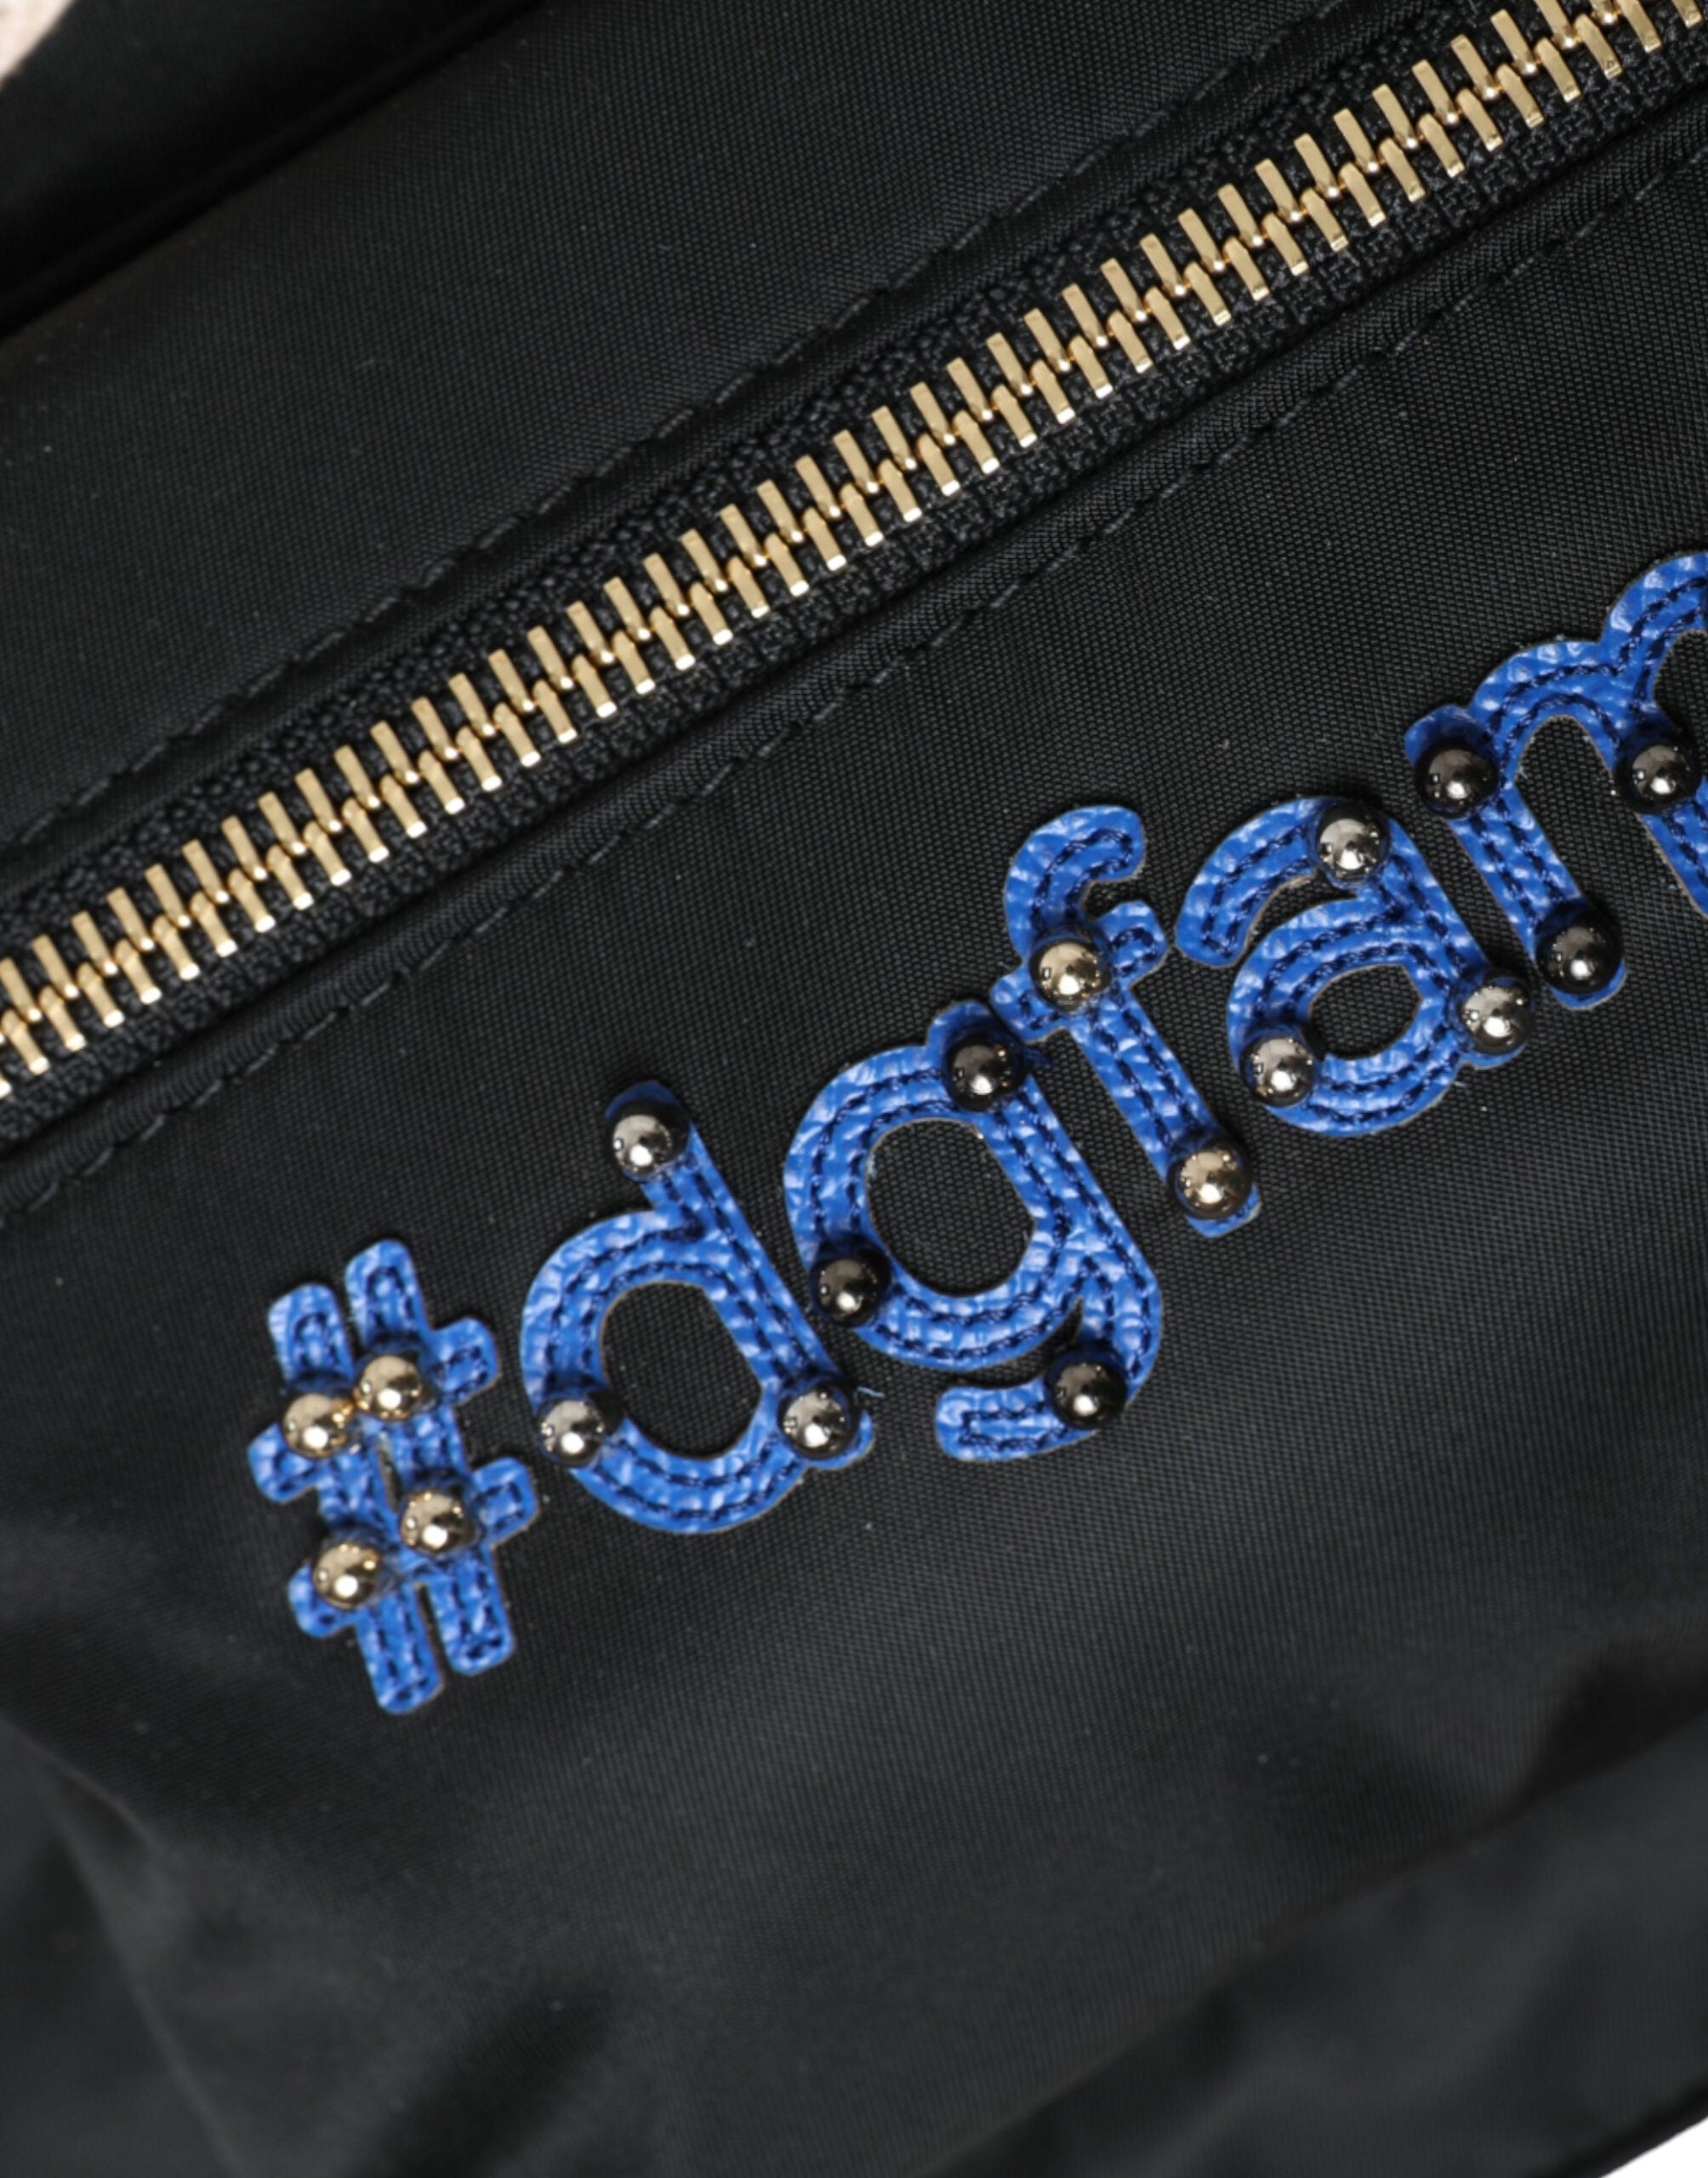 Dolce & Gabbana Black Nylon #DGFamily Backpack VULCANO Bag